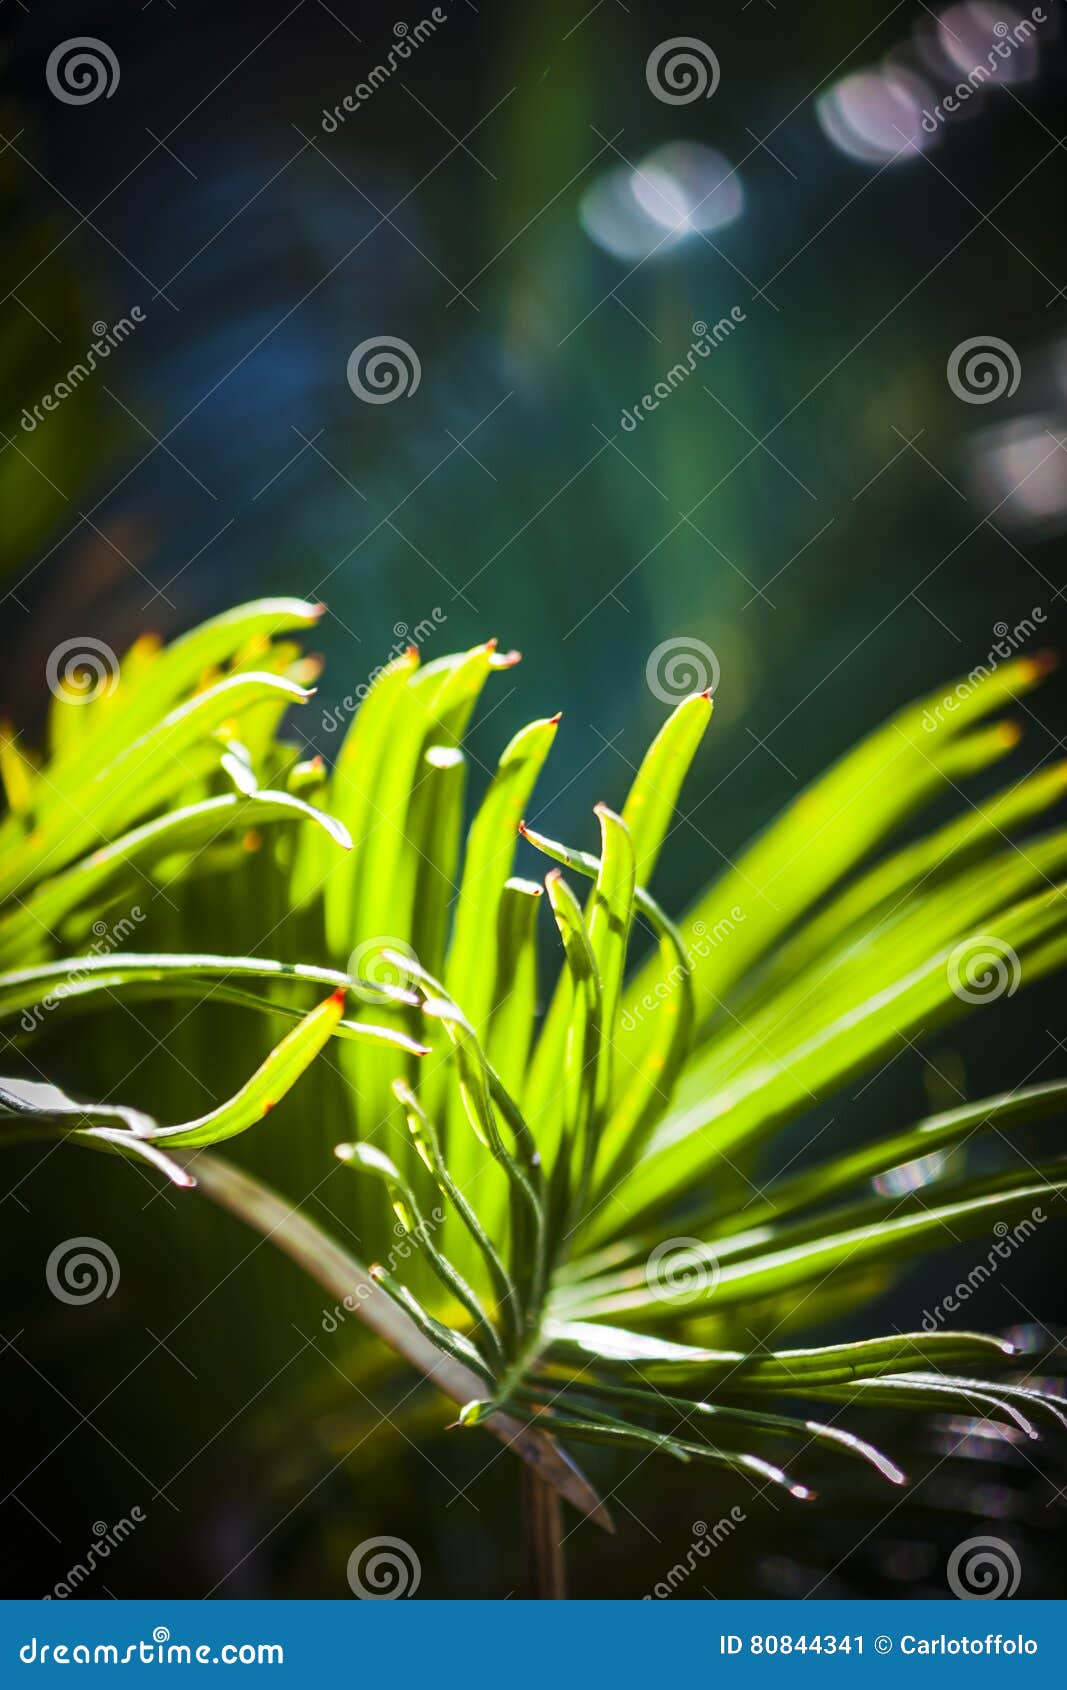 chiquita palm leaves